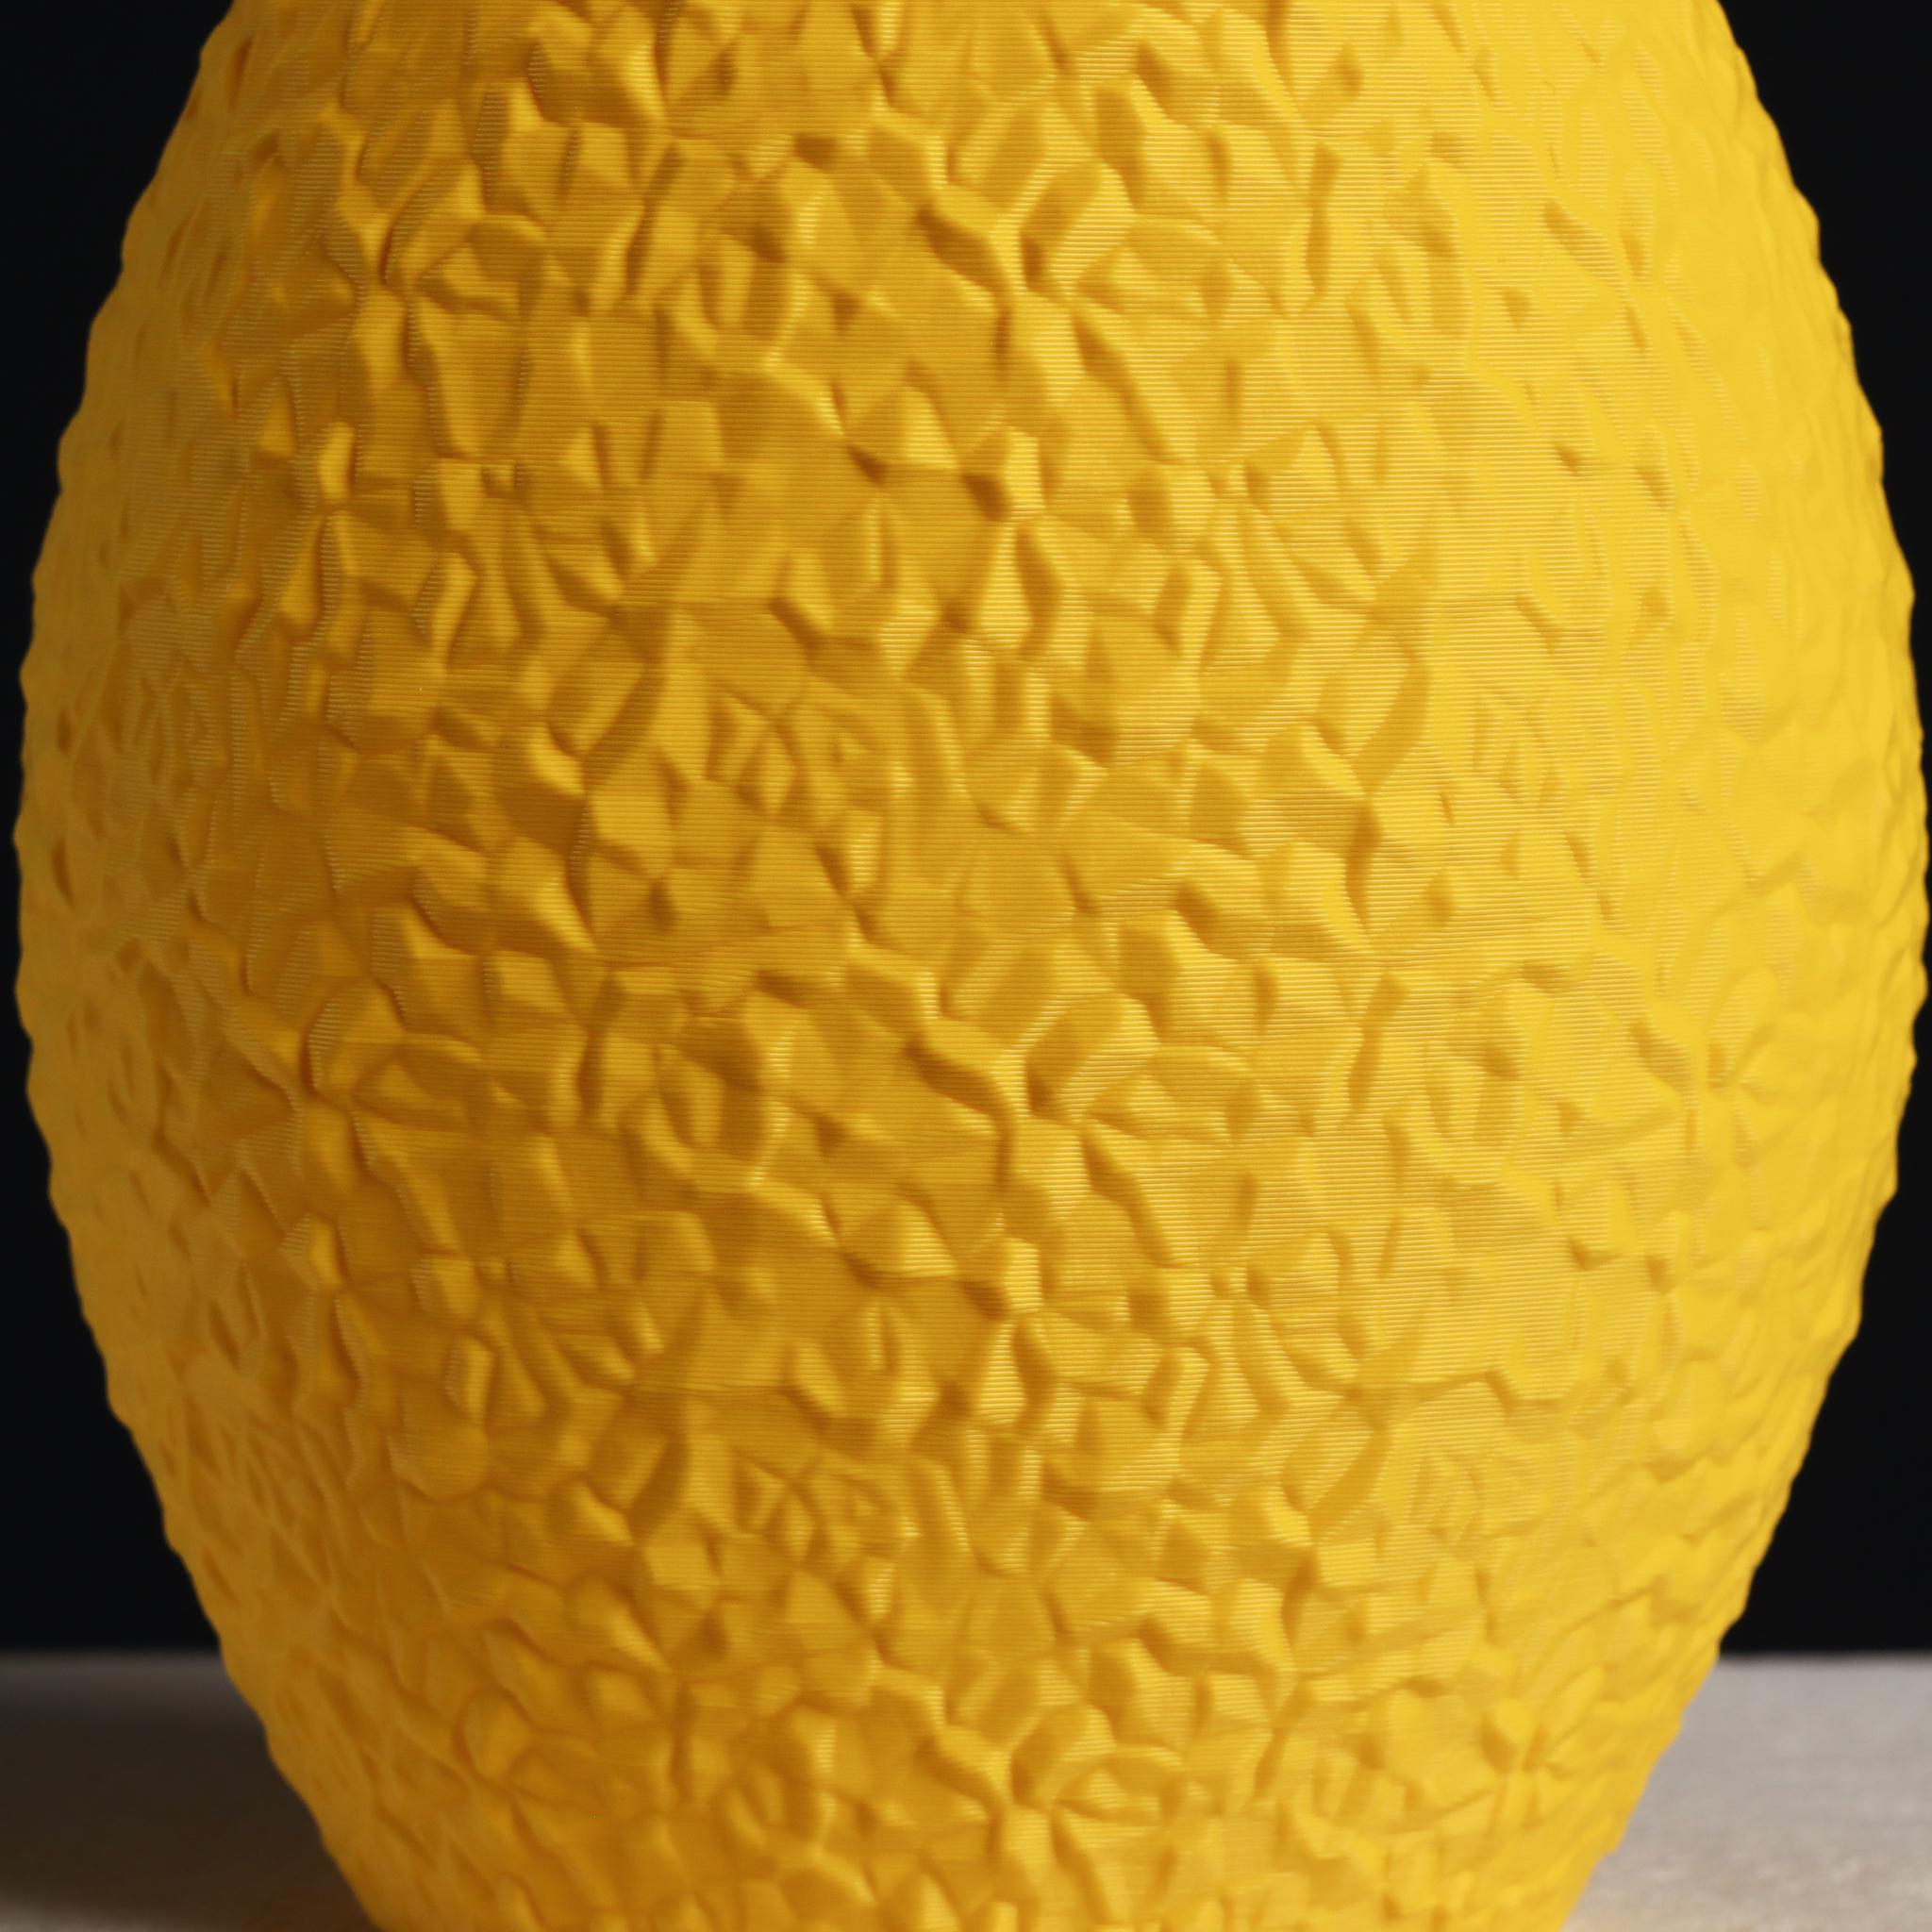  Decorative vase with Granite Texture (Vase Mode)  3d model